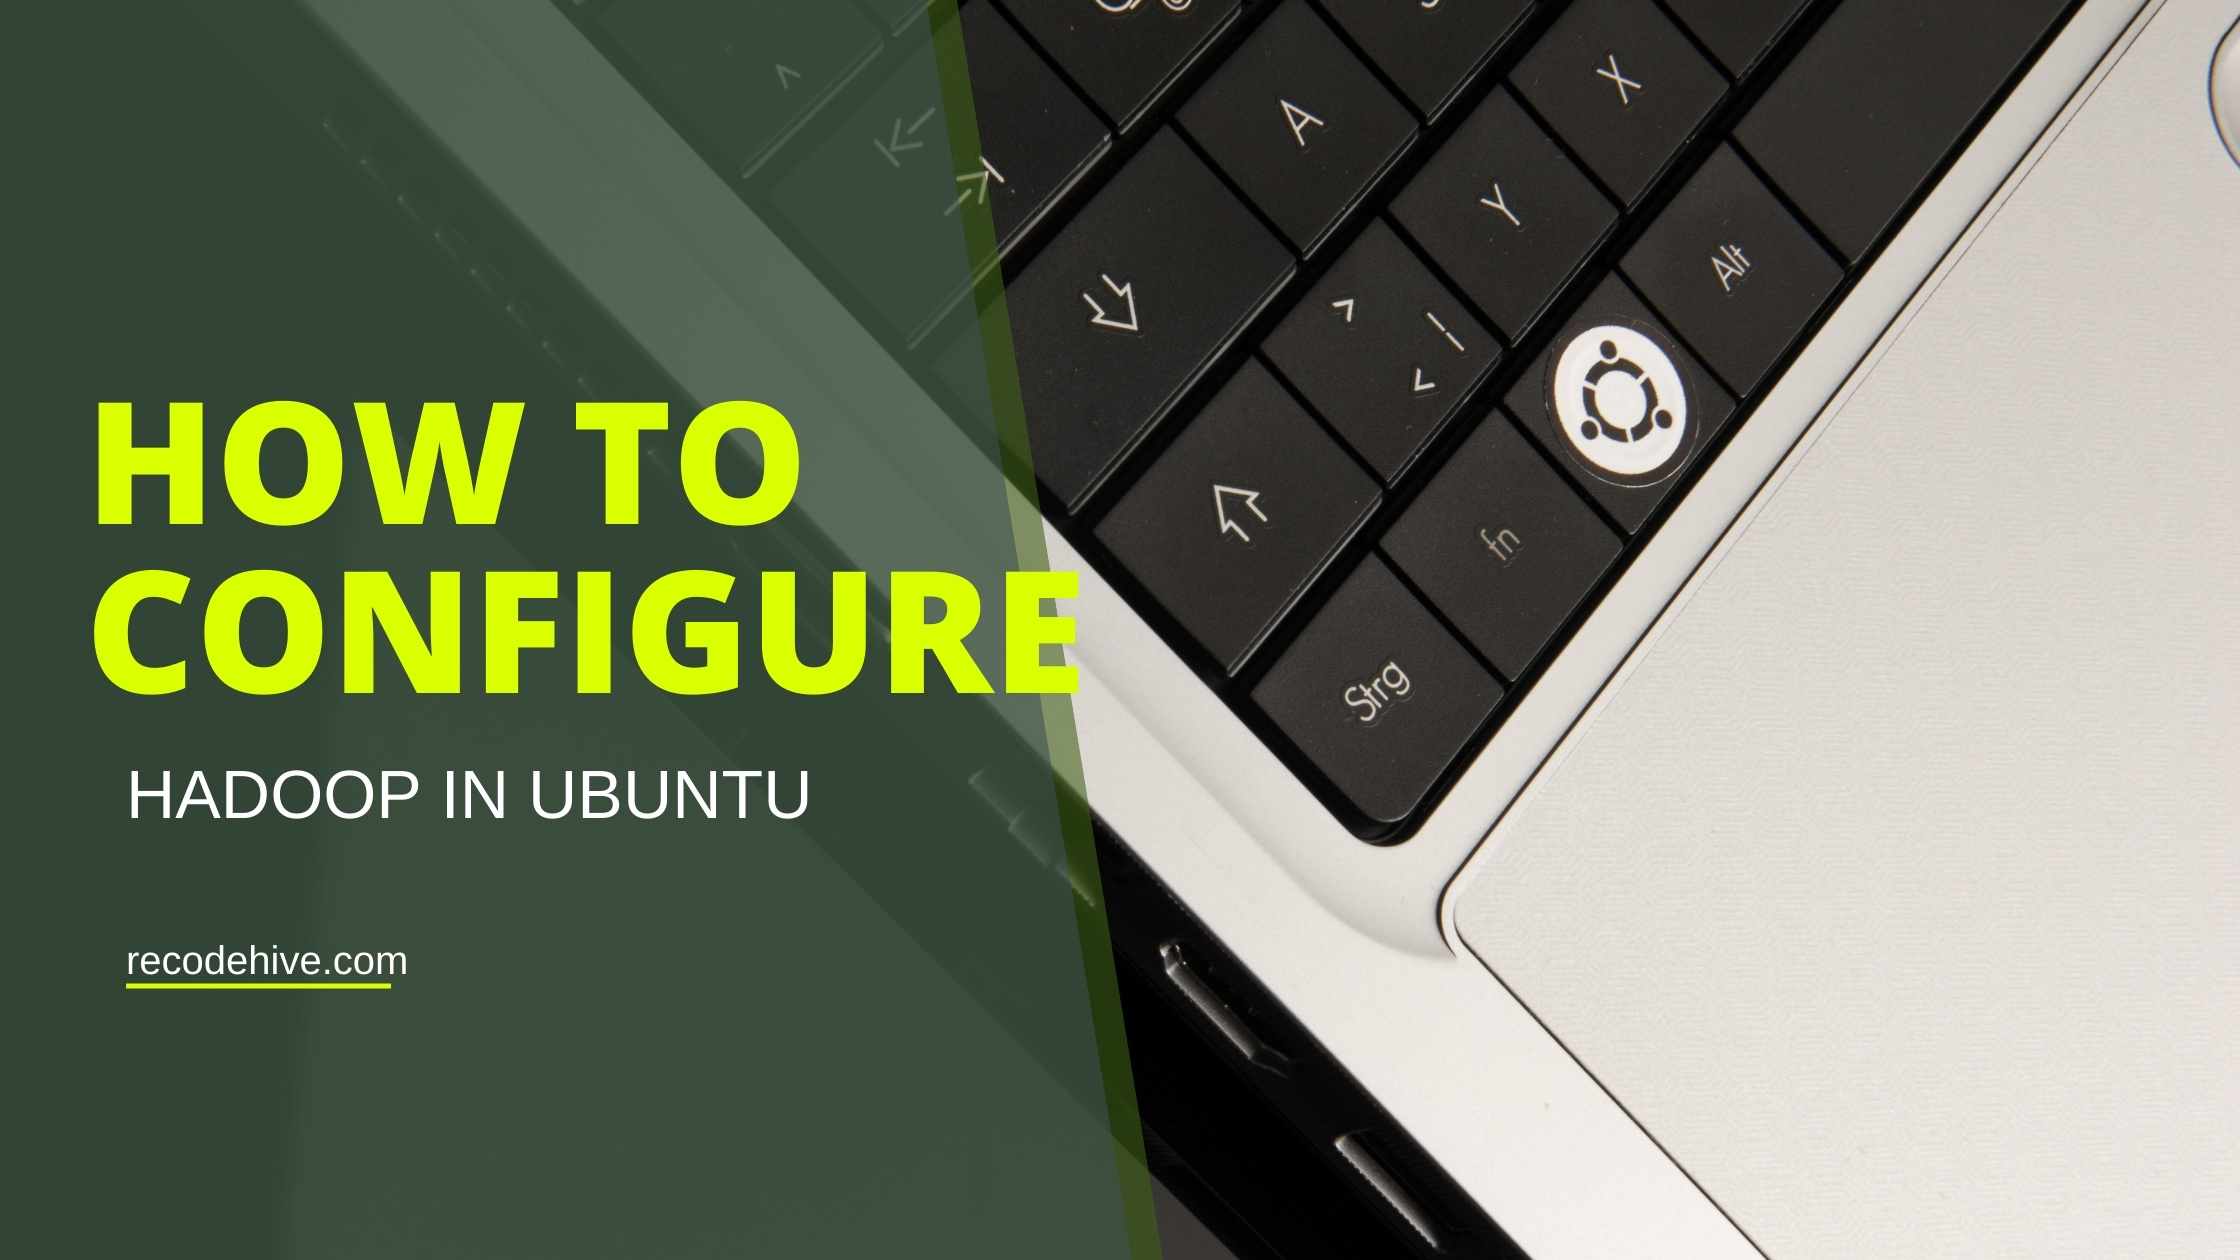 Confugure hadoop on ubuntu